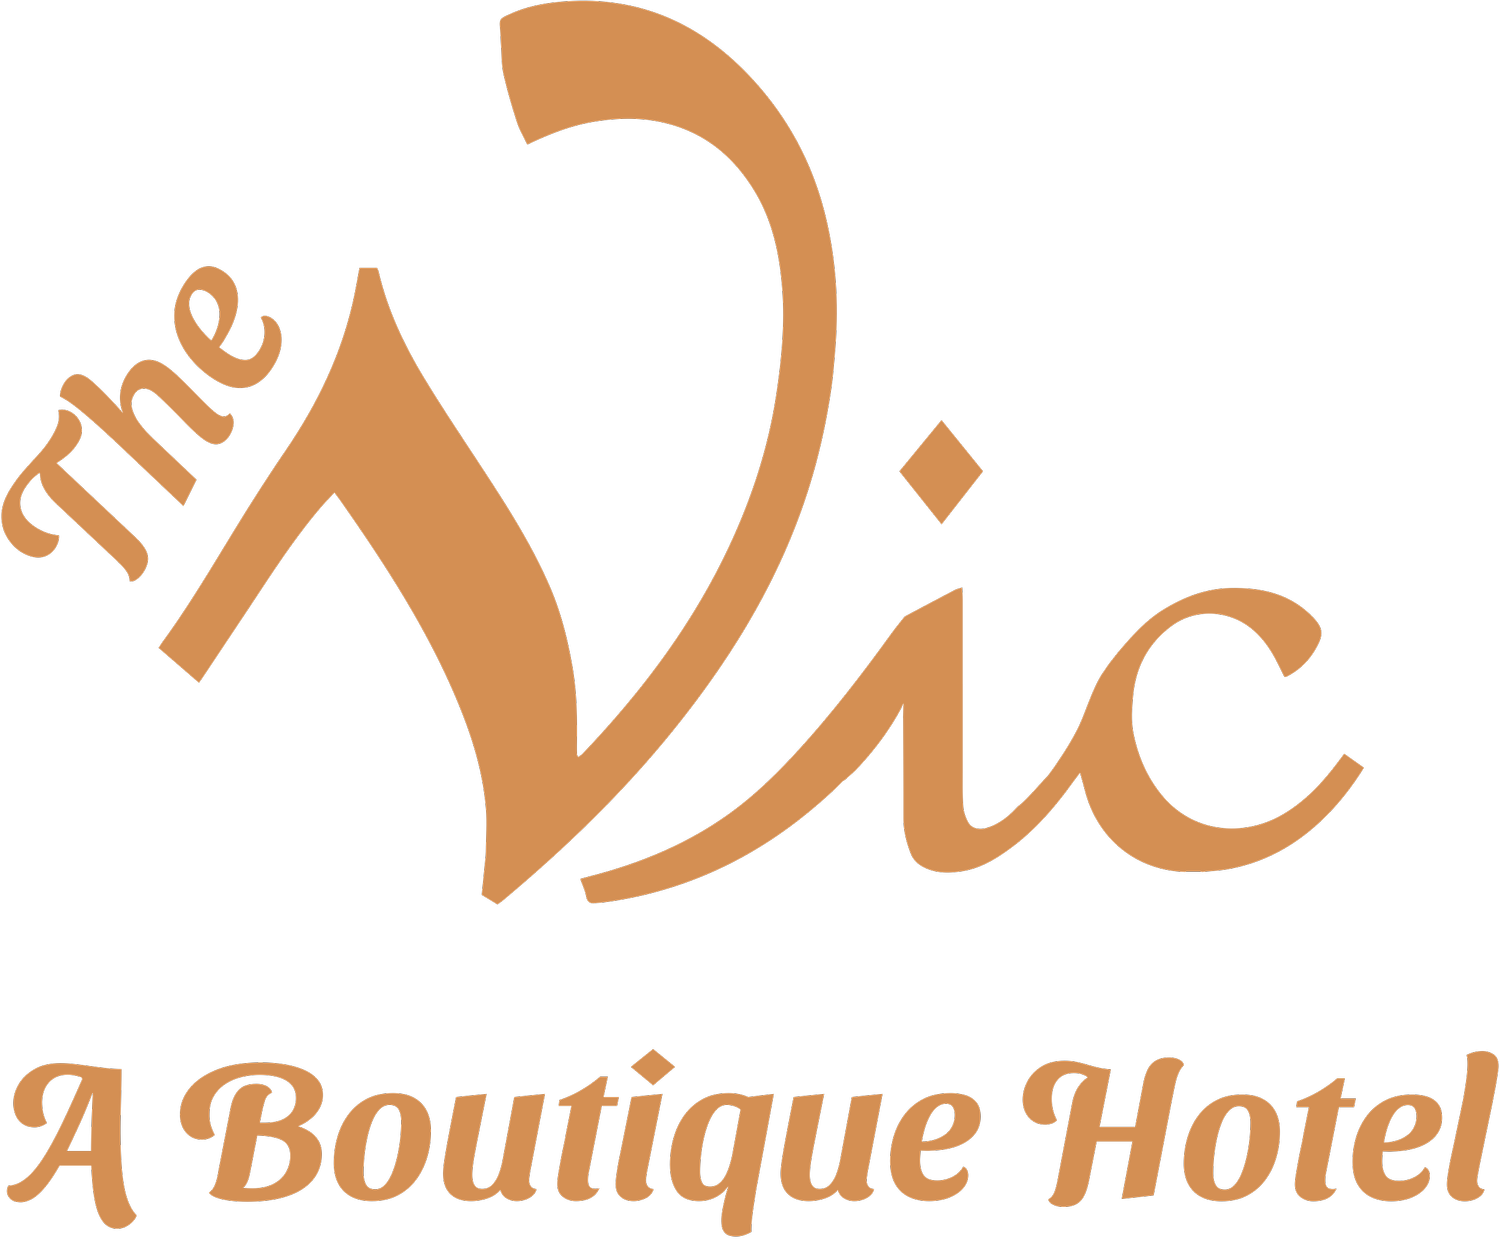 The Vic - Boutique Hotel in Victoria, BC